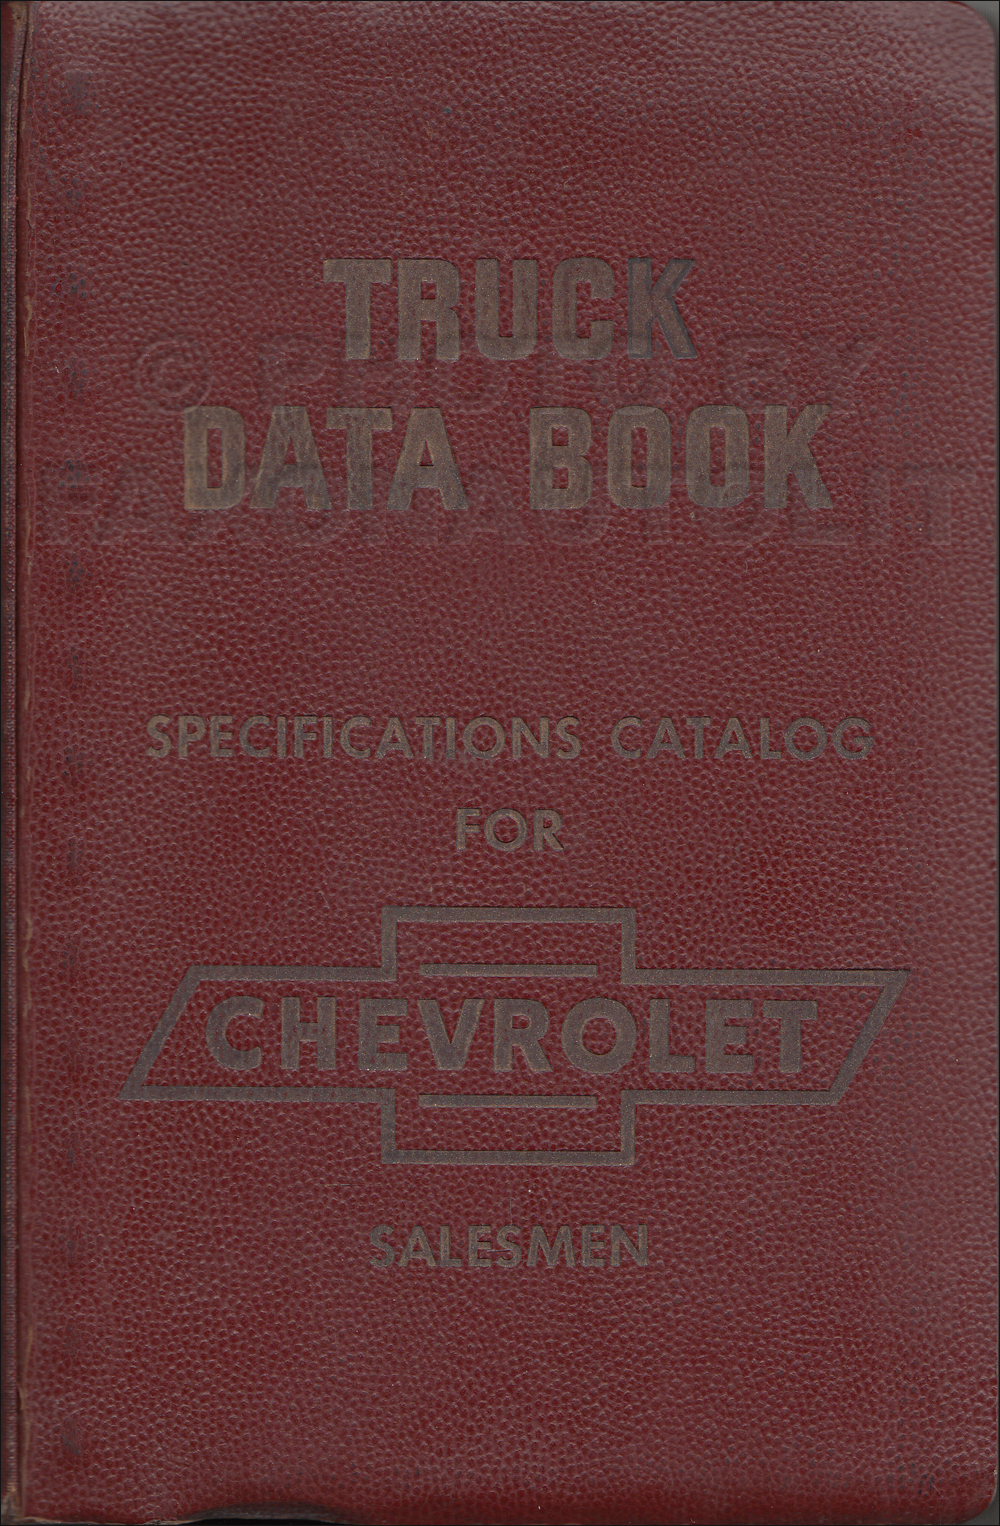 1957 Chevrolet Truck Data Book Original